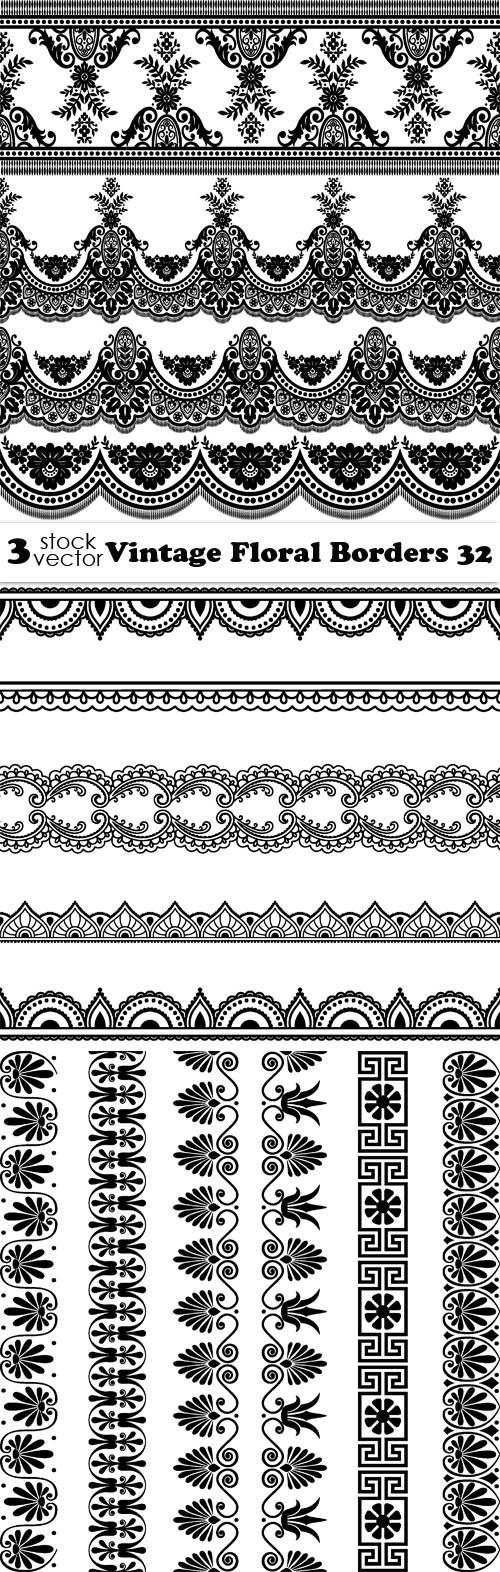 Vectors - Vintage Floral Borders 32